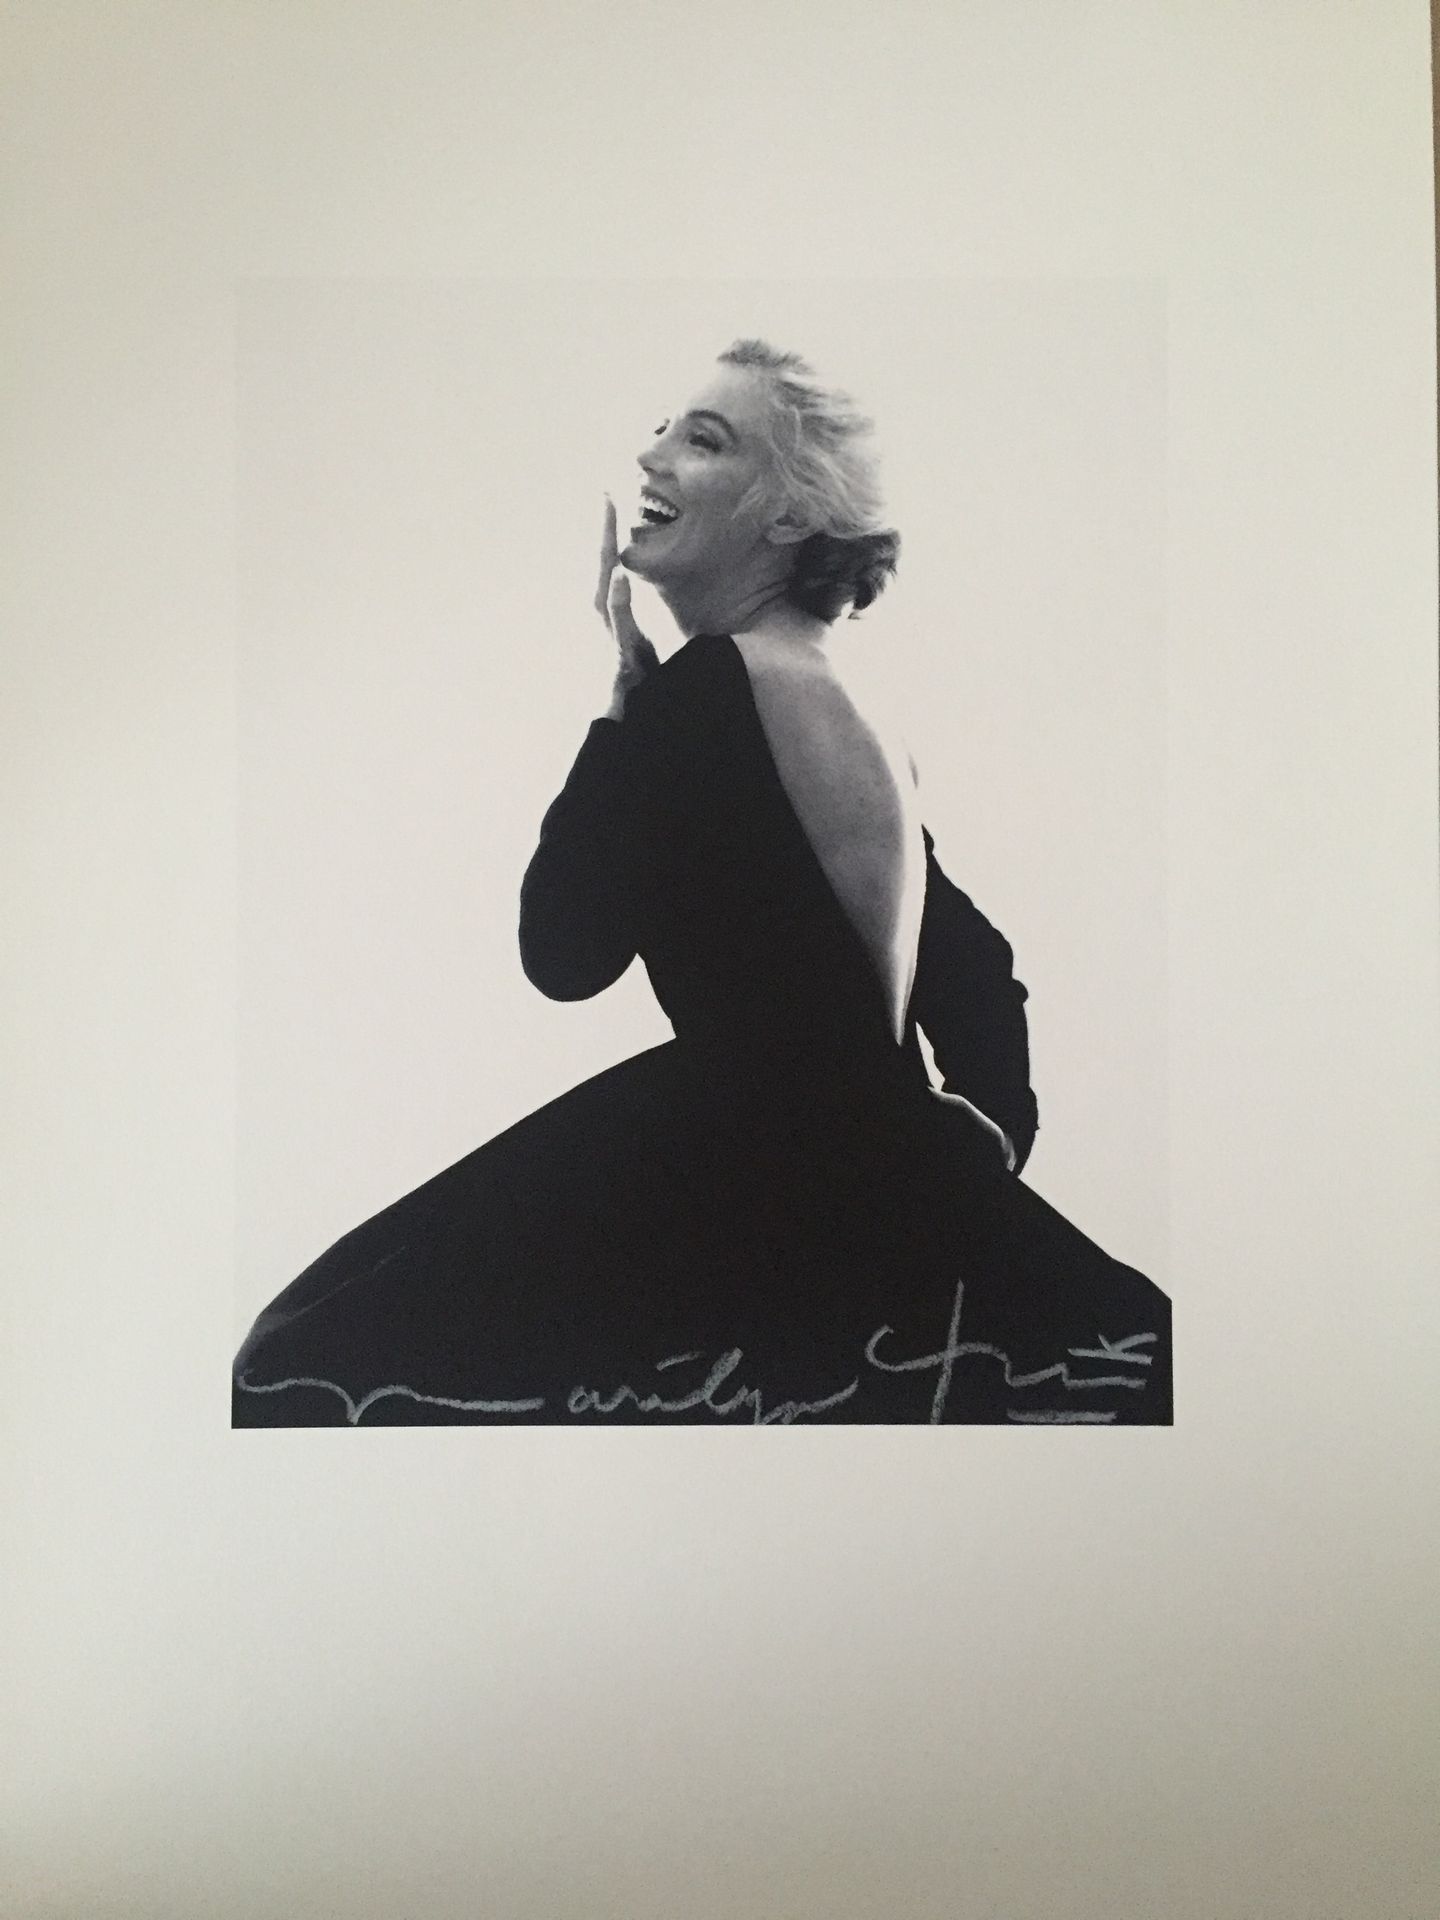 Bert STERN Bert STERN (1929-2013)

Marilyn riendo con un vestido negro, 2011

 
&hellip;